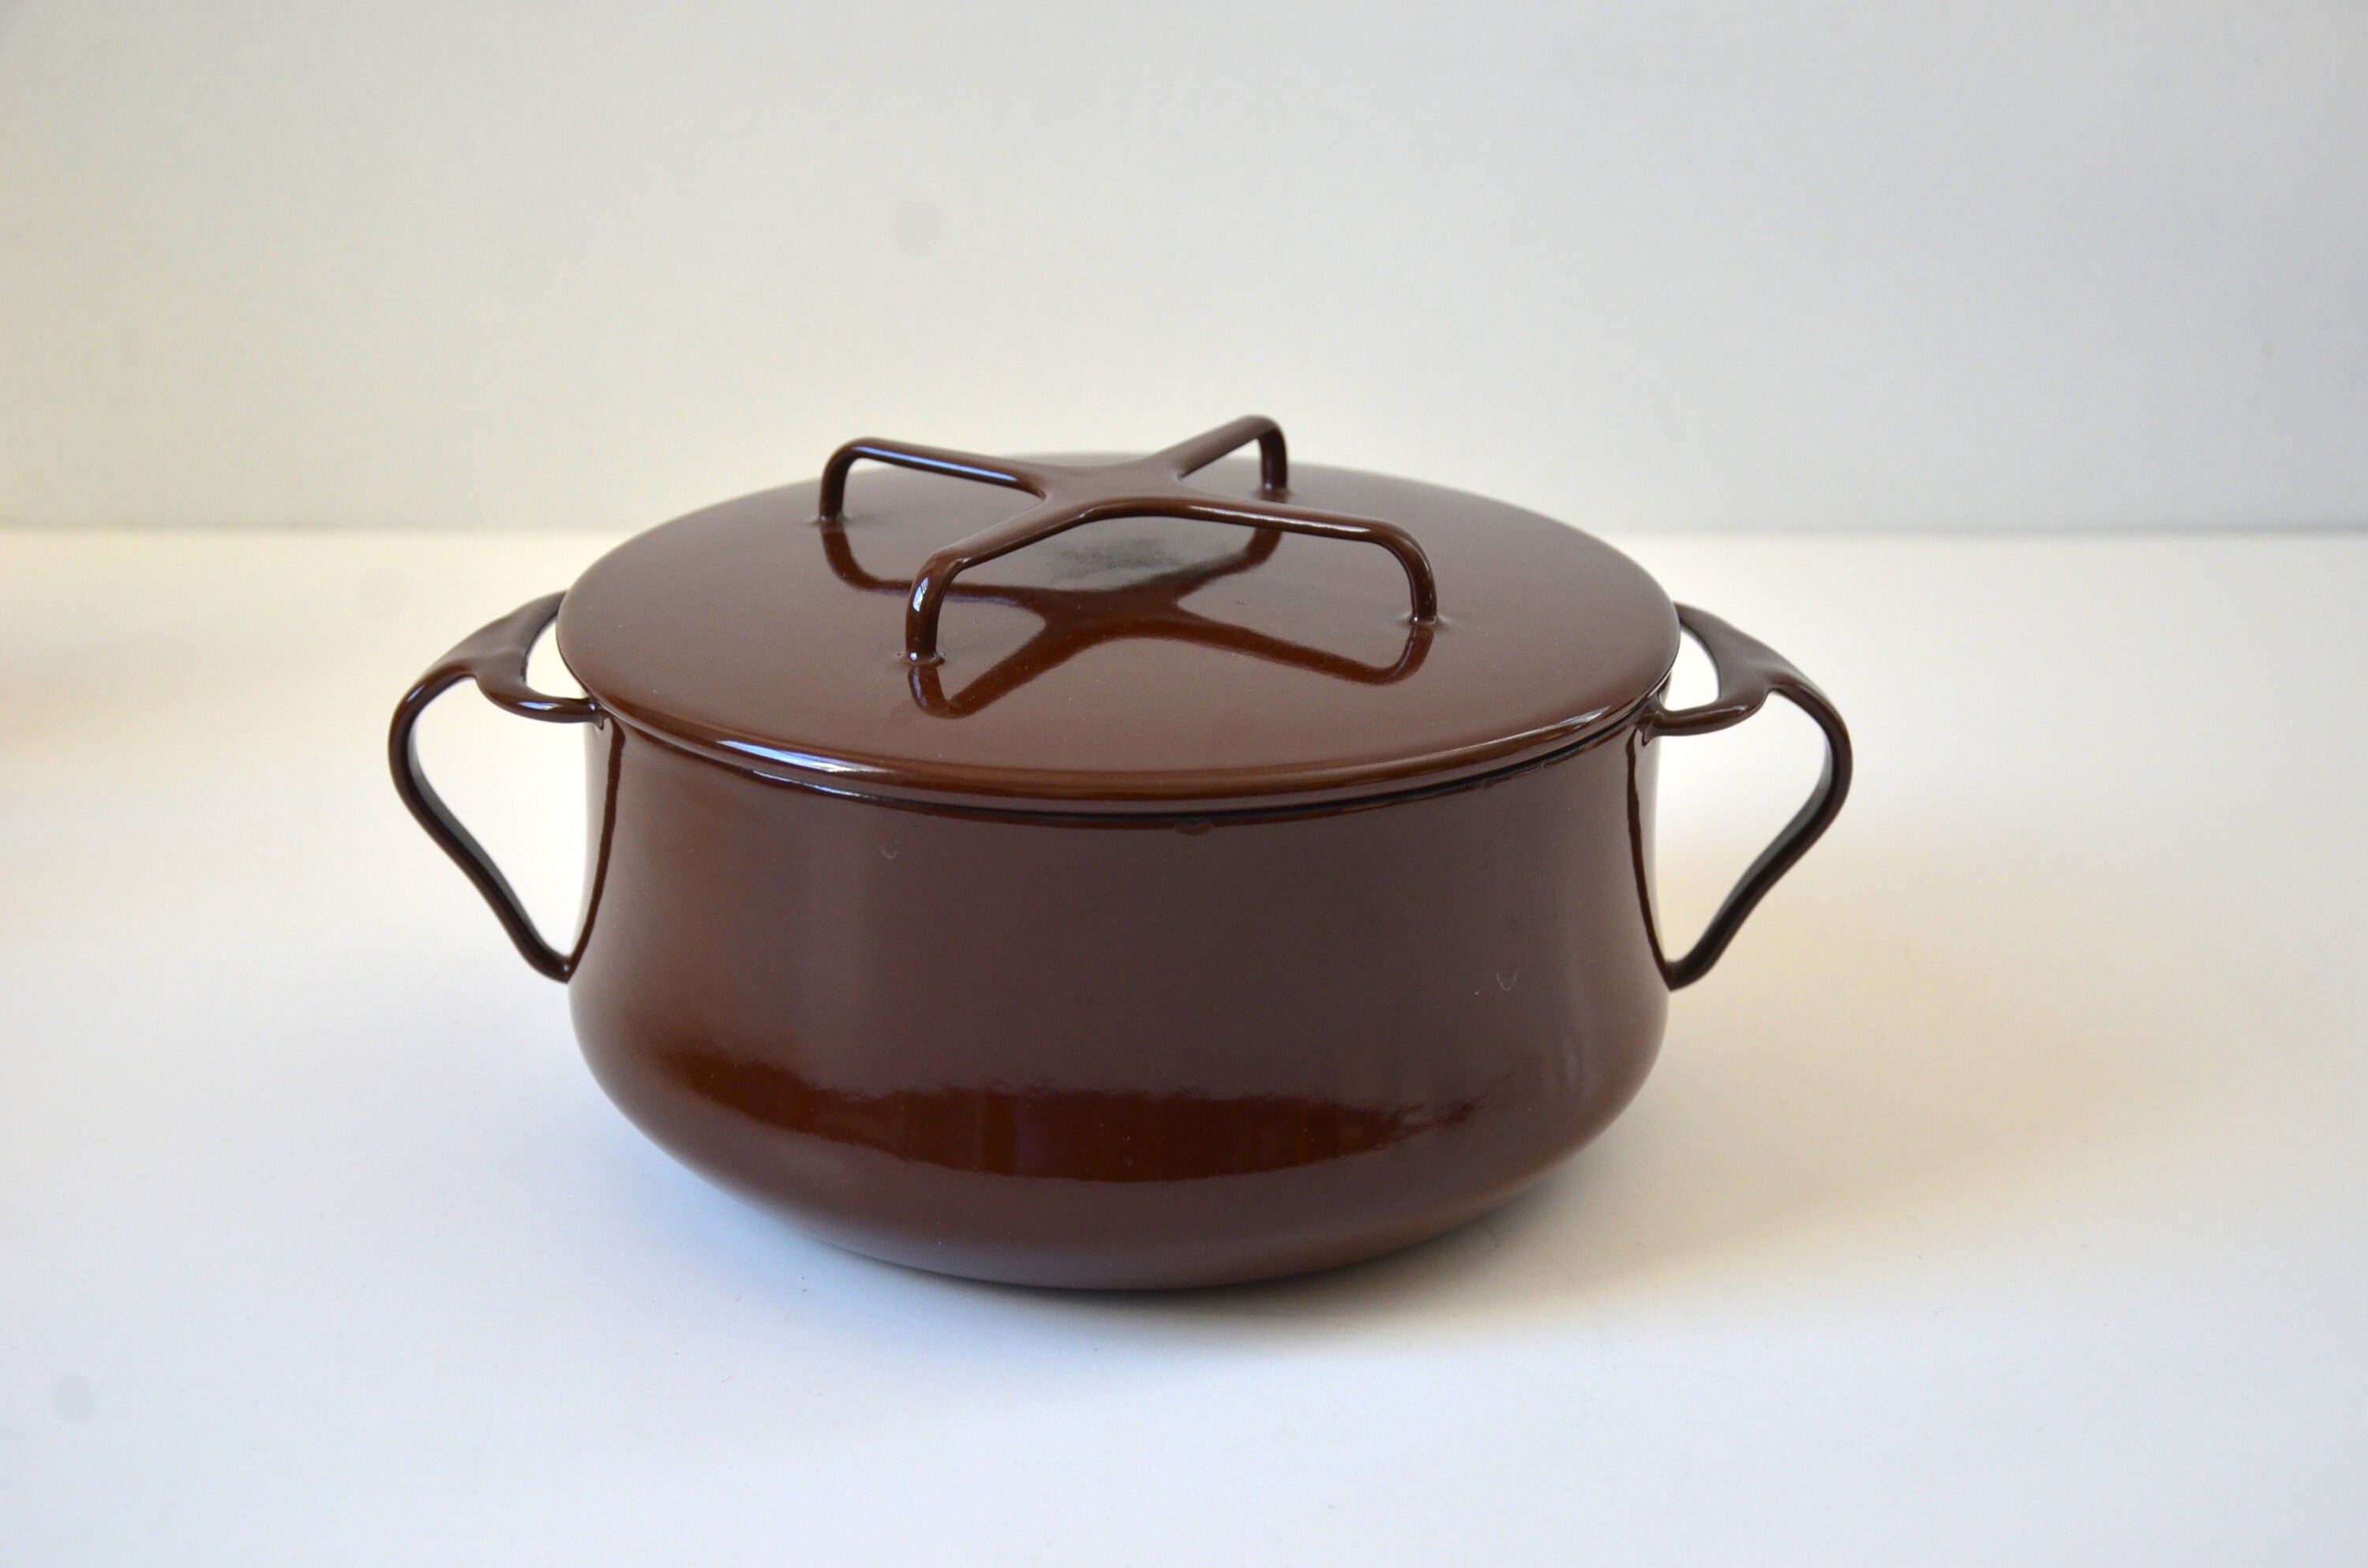 Dansk Kobenstyle hand pot with wooden handle 2QT / 5 colors in